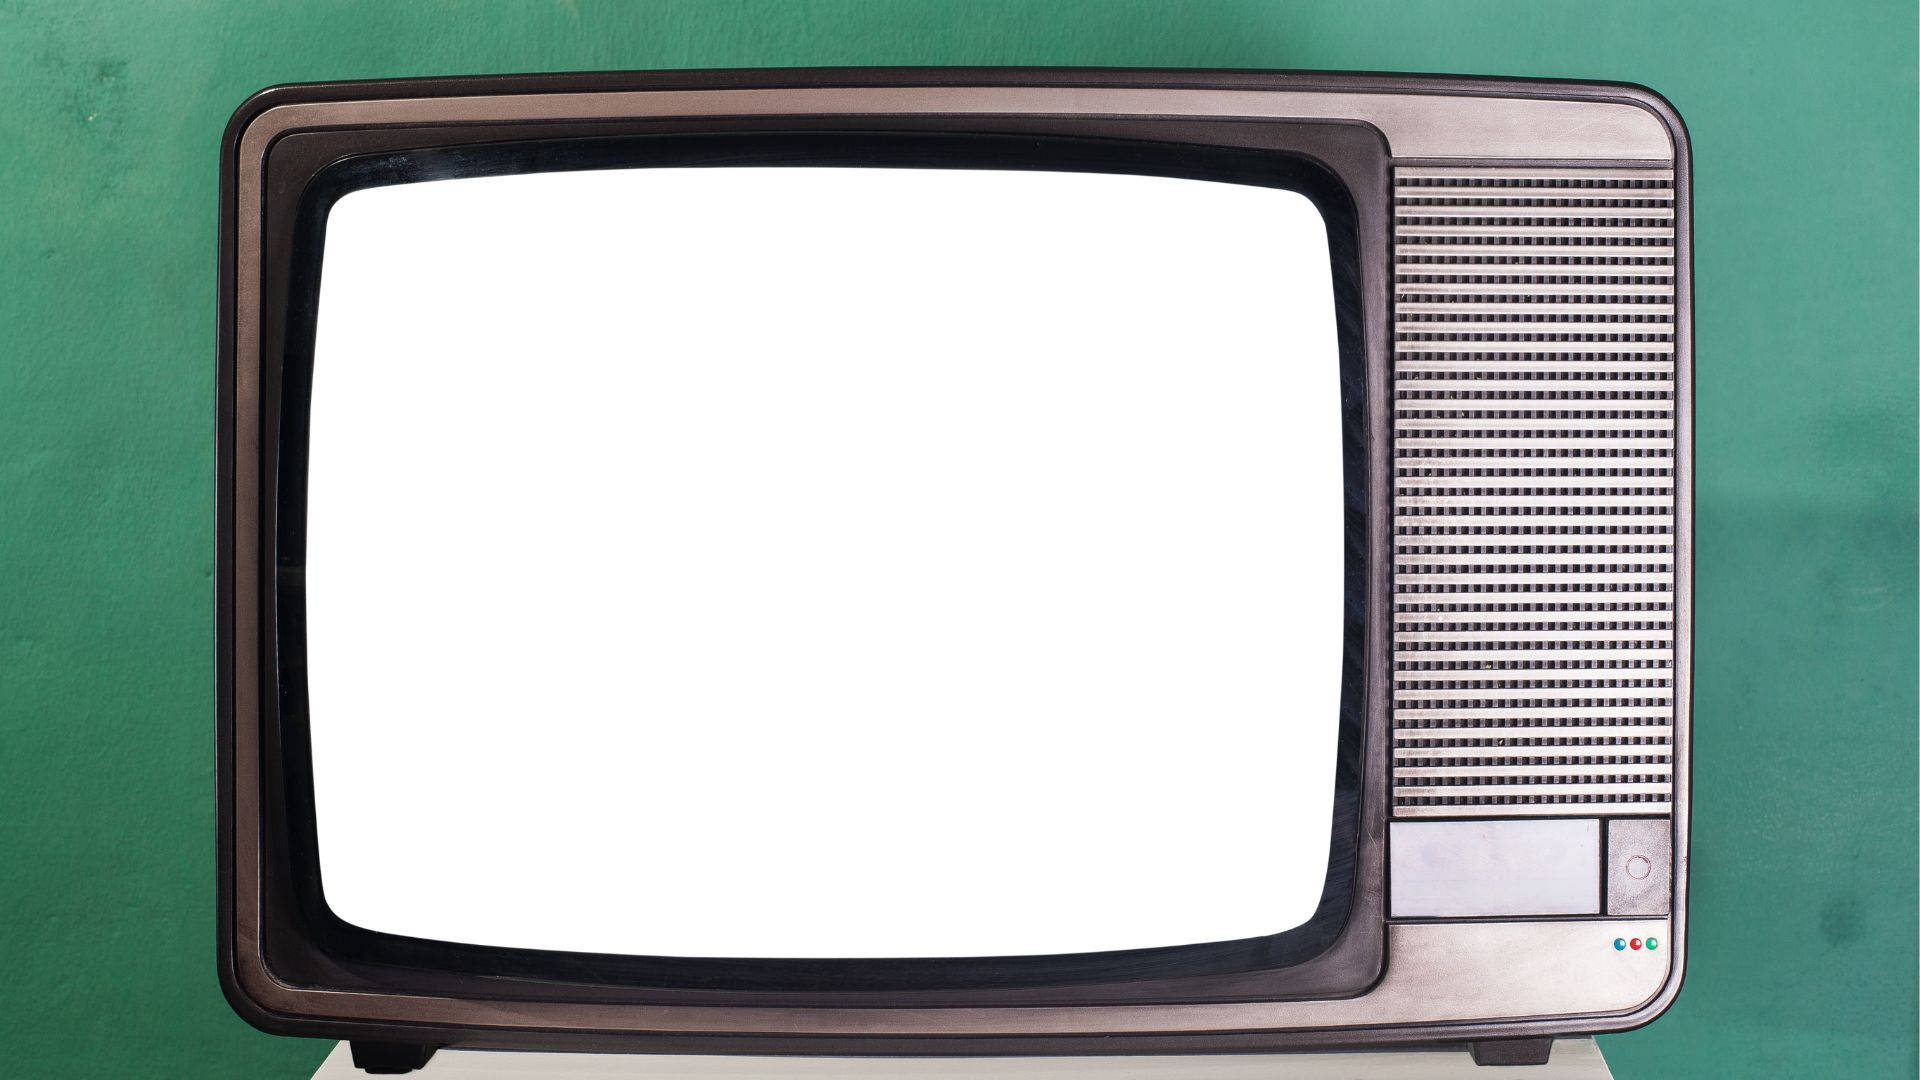 Televisorde Tubo Crt Antiguo De La Década De 1980 Con Pantalla Blanca Fondo de pantalla